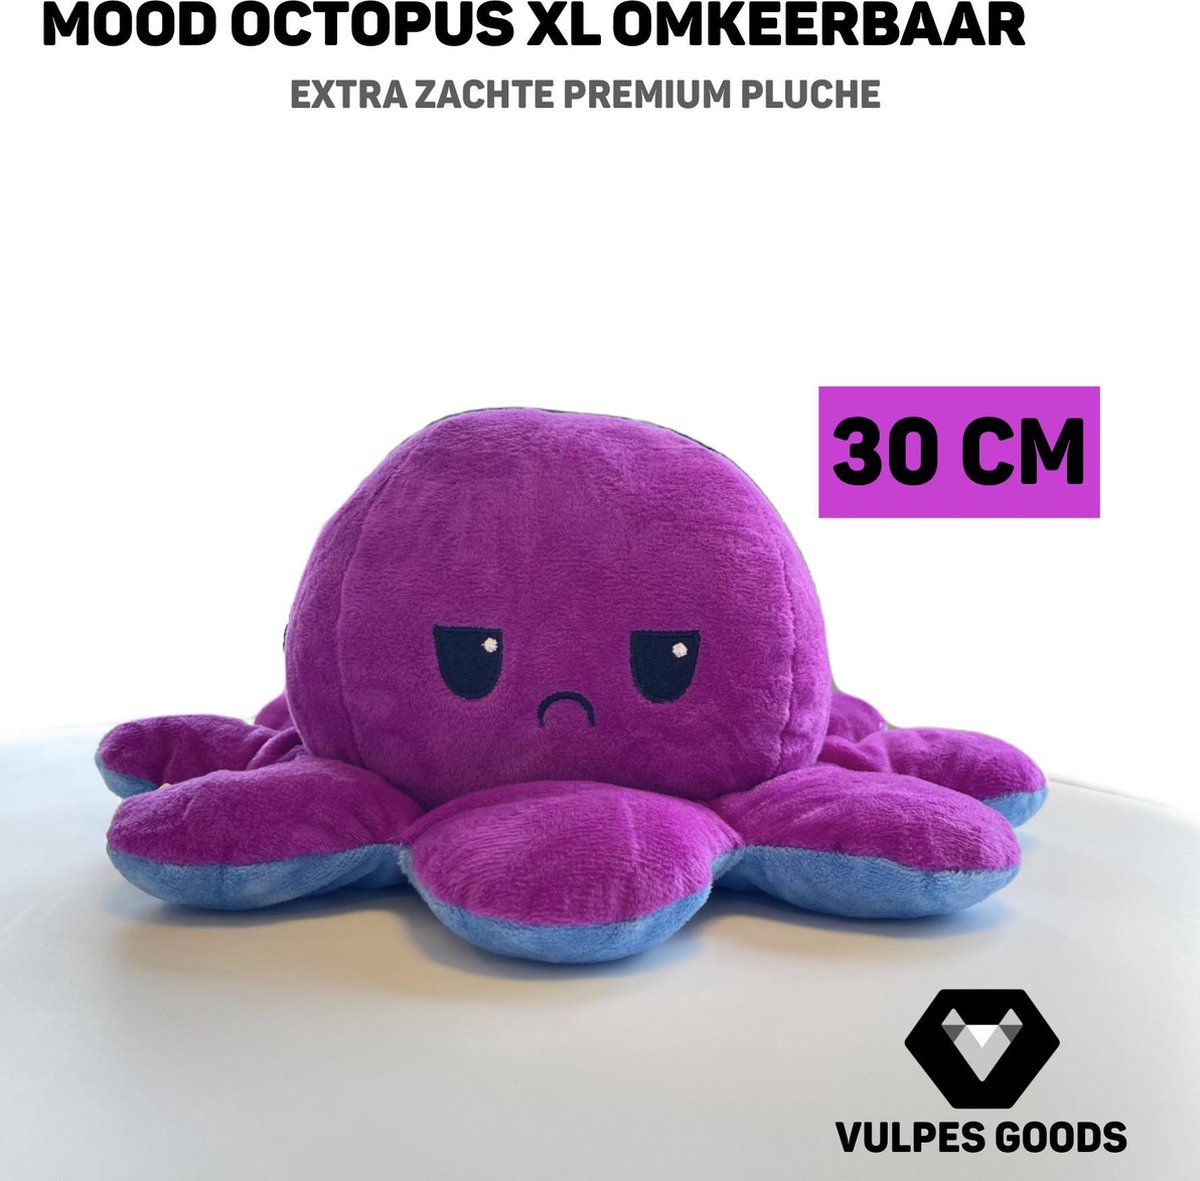 Mood octopus - Vulpes Goods® XL mood octopus - 30 cm - XL - Octopus knuffel  - Knuffel - Mood knuffel - TIKTOK - Tiktok knuffel - NEW MODEL - LIMITED EDITION - Pluche knuffel - Knuffeldier - Octopus Omkeerbaar - Mood Octopus XL - Trend 2021